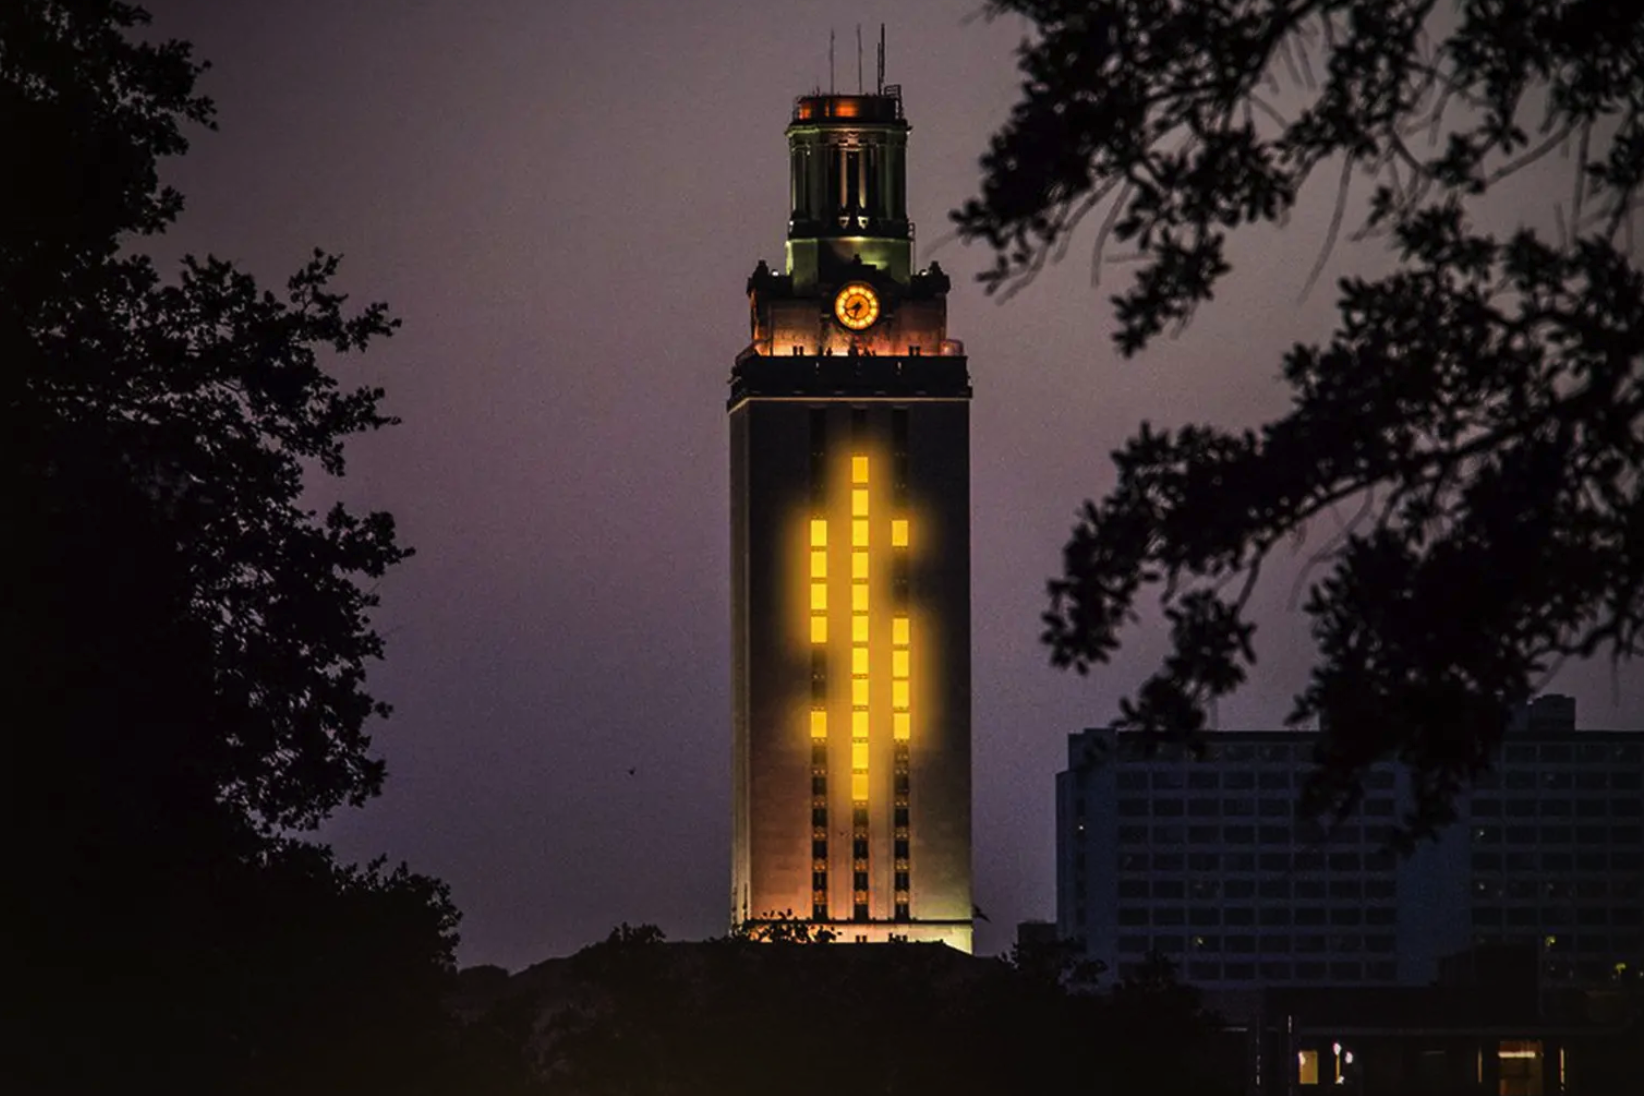 University of Texas Tower with money iconographic